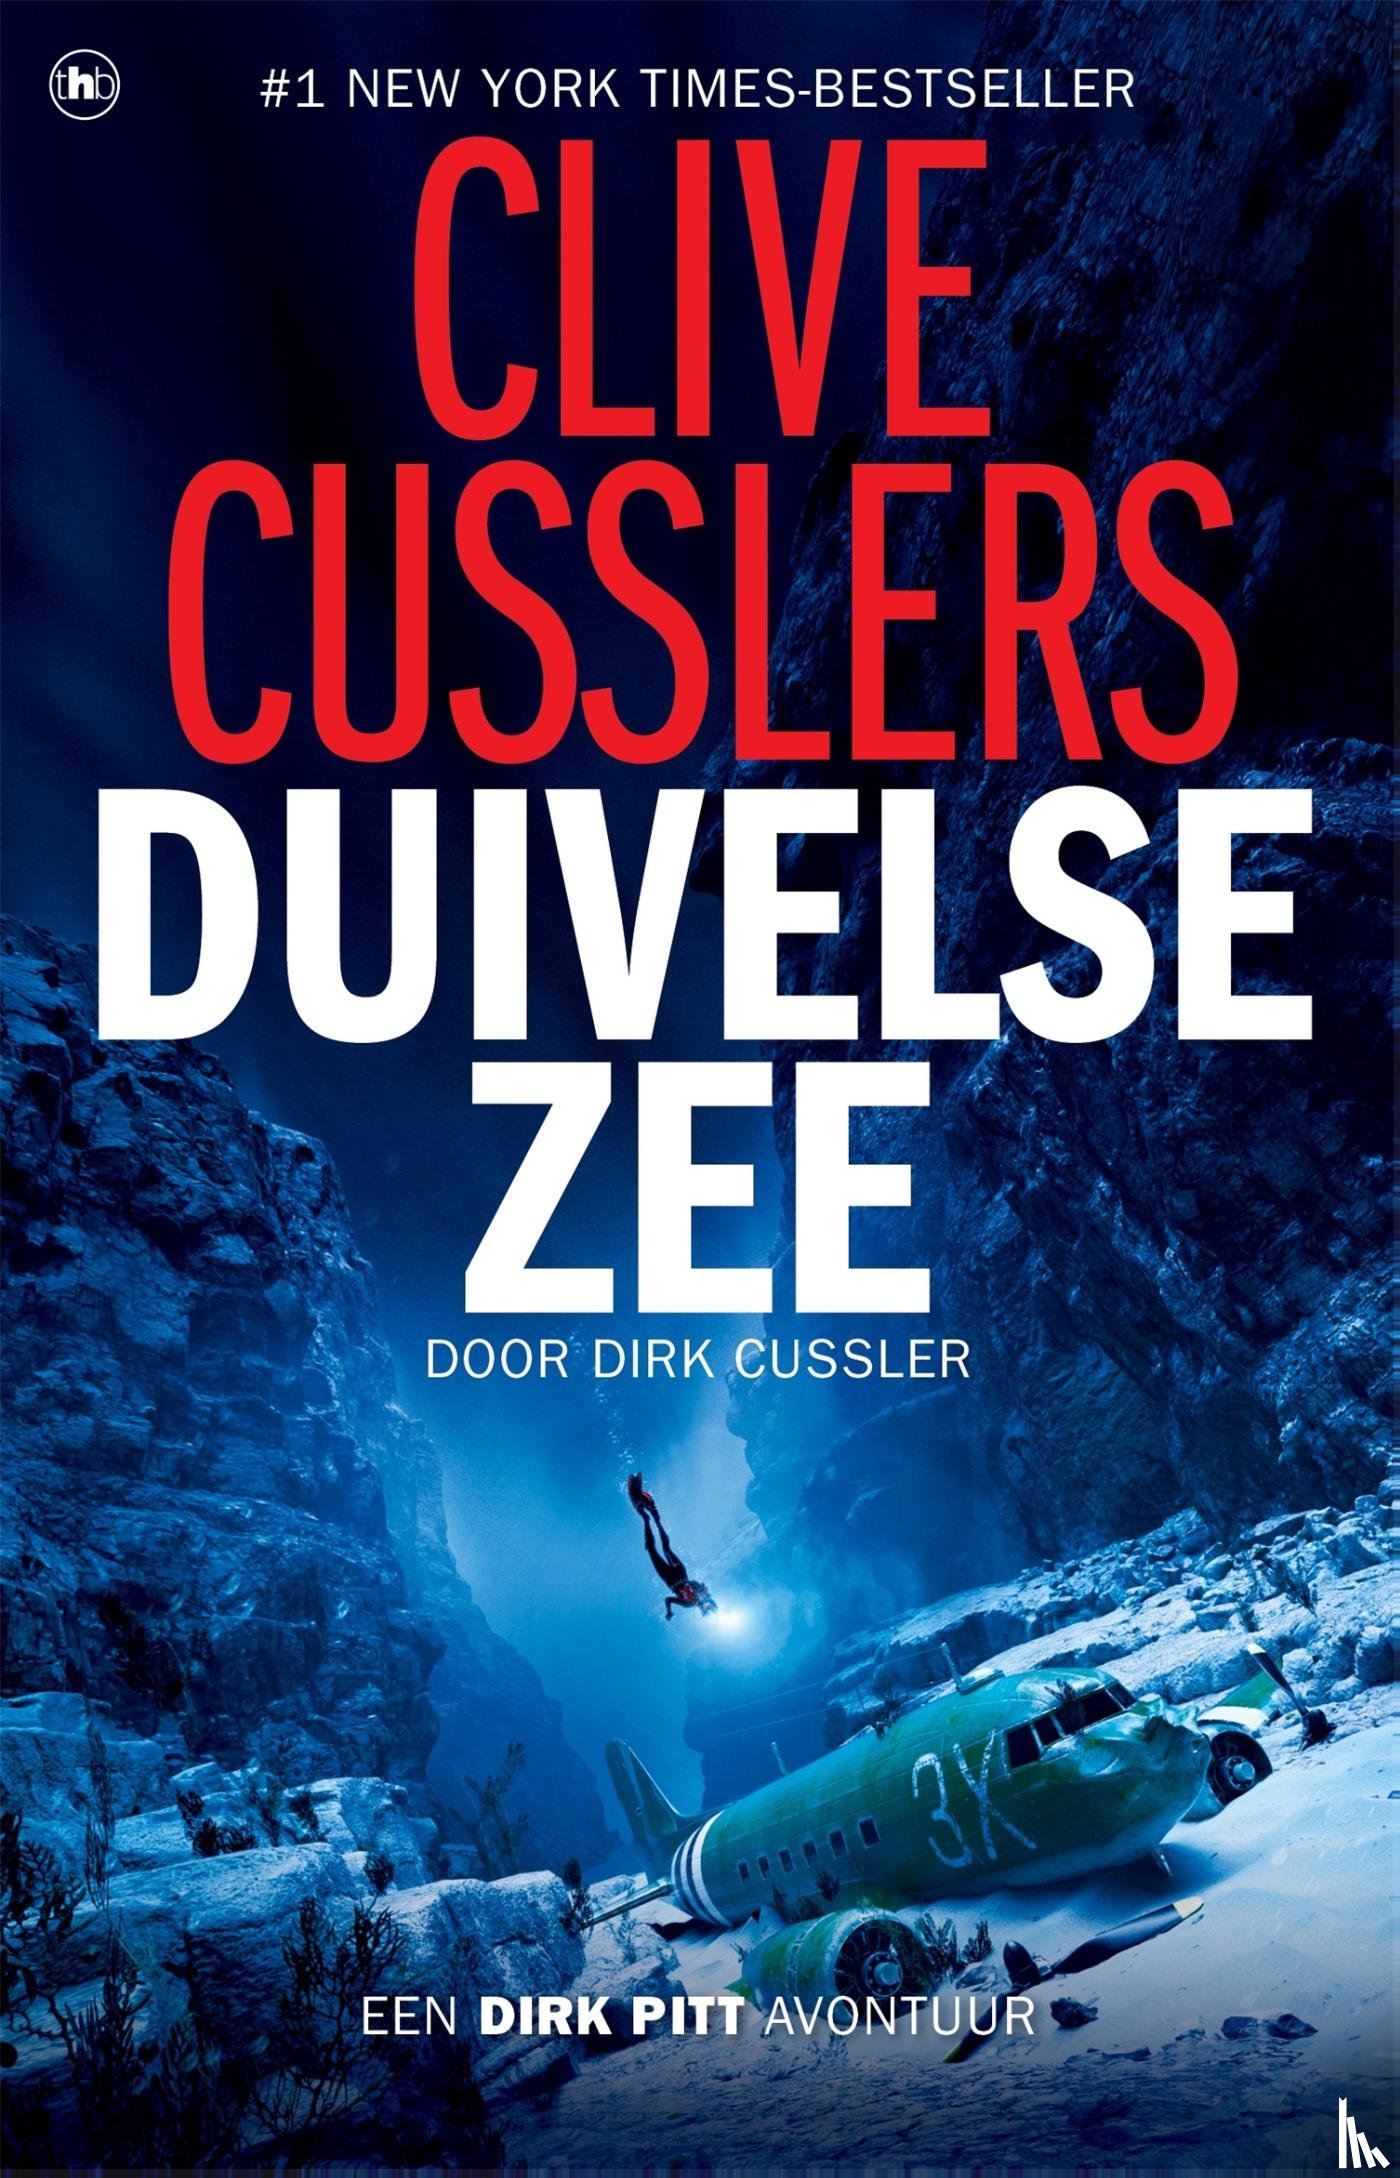 Cussler, Dirk - Clive Cusslers Duivelse zee